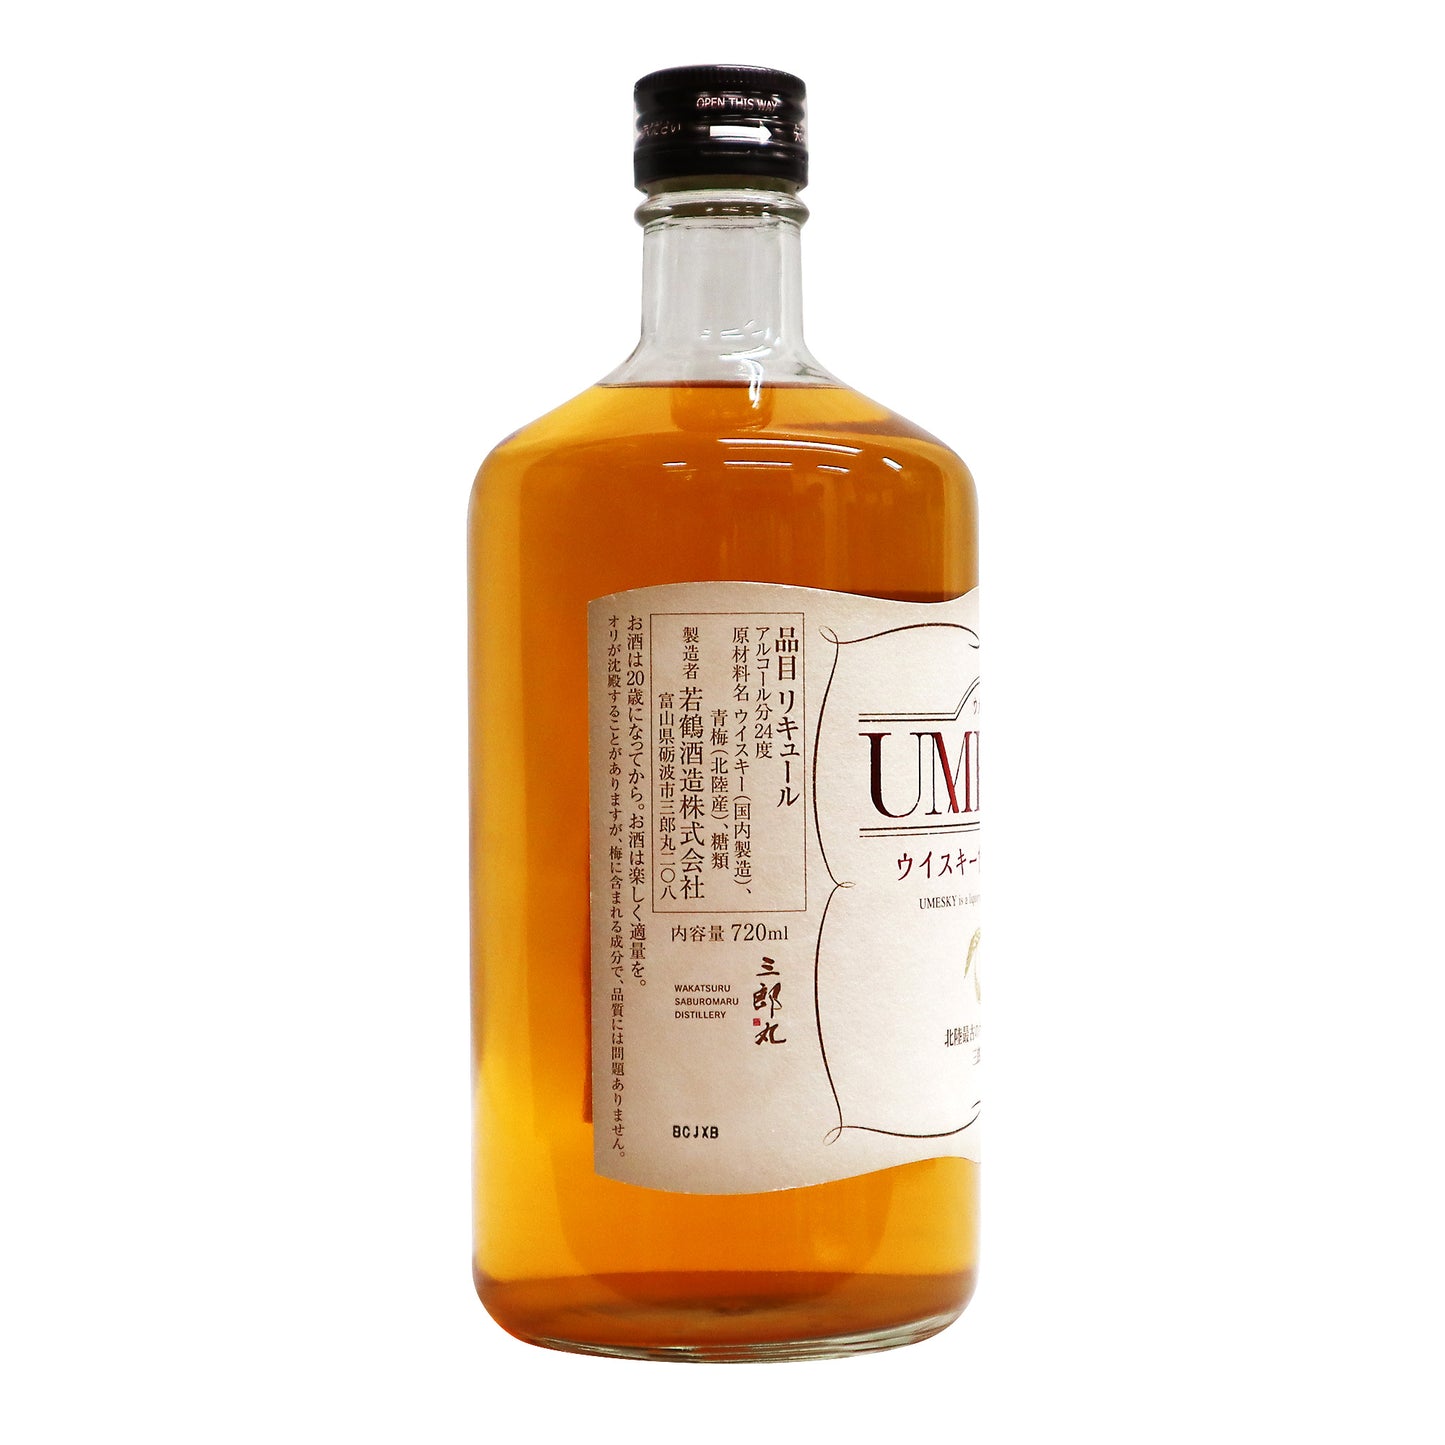 【UMESKY(ウメスキー)】WAKATSURU 720ml/若鶴酒造